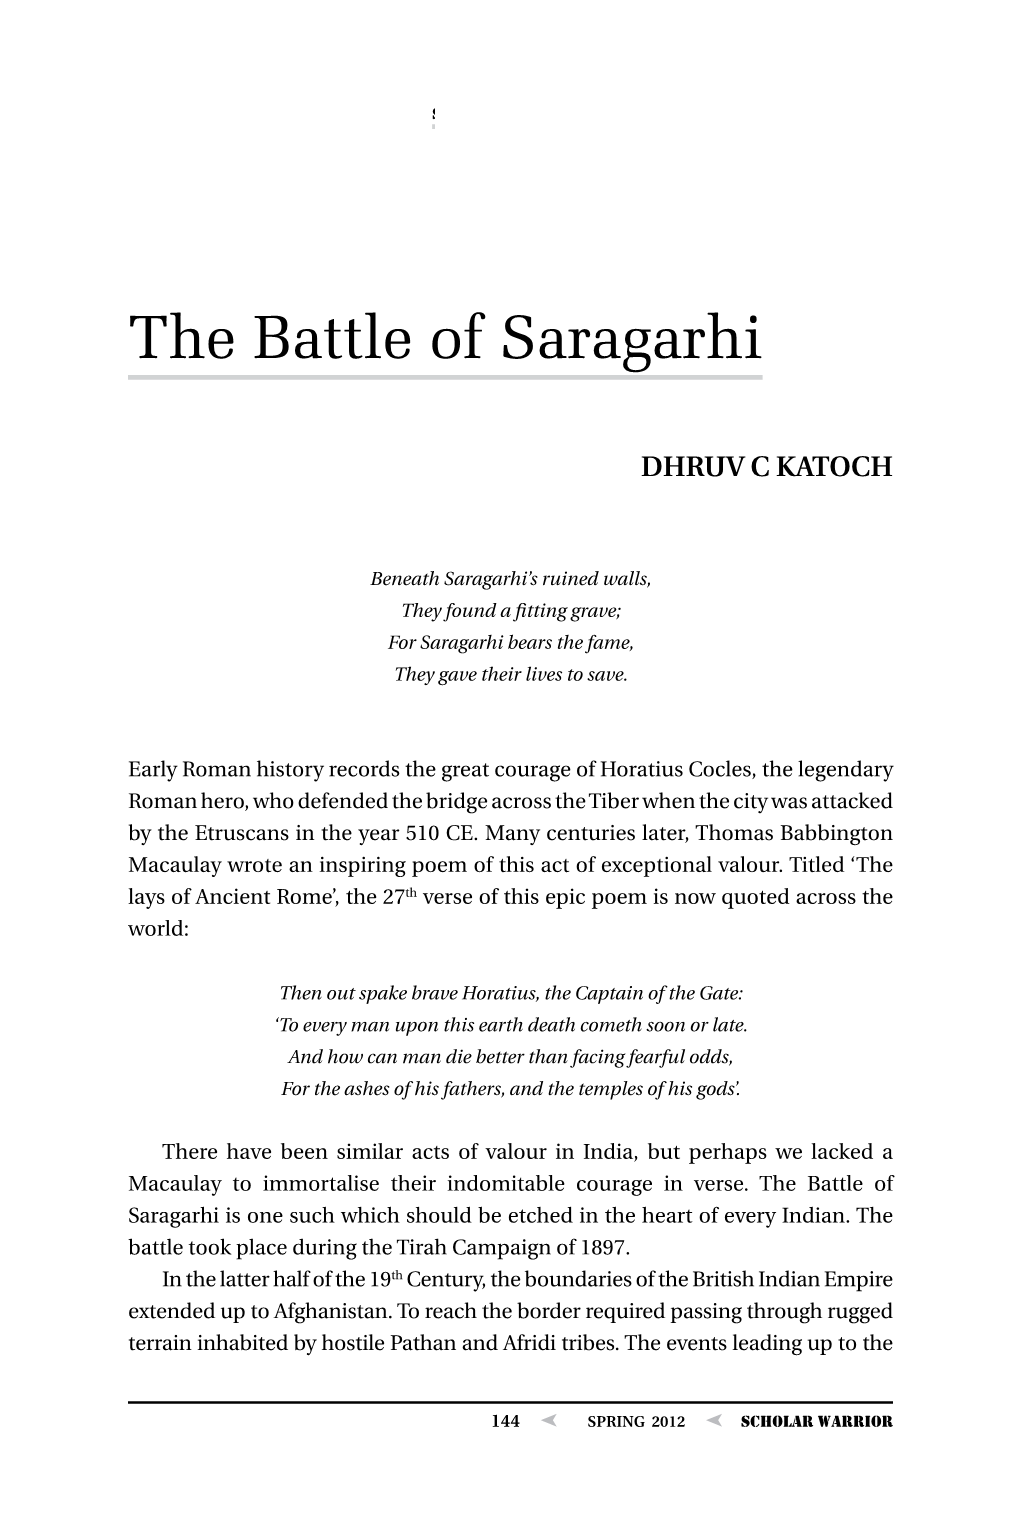 The Battle of Saragarhi